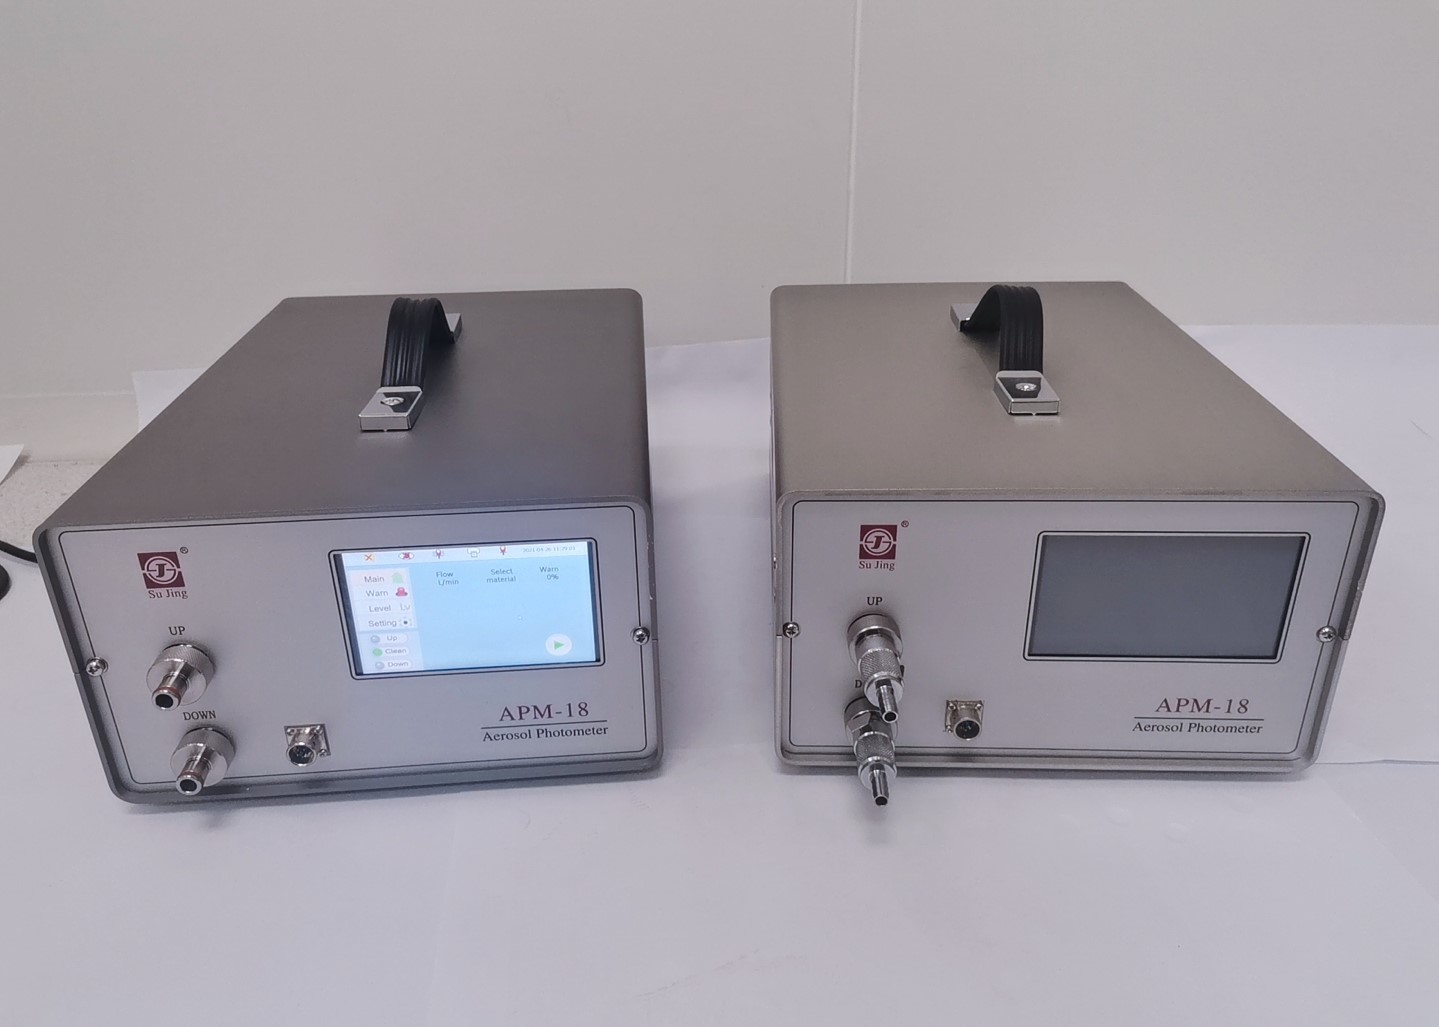 Wholesale Pharma Factory Digital Aerosol Photometer APM-18 220VAC from china suppliers